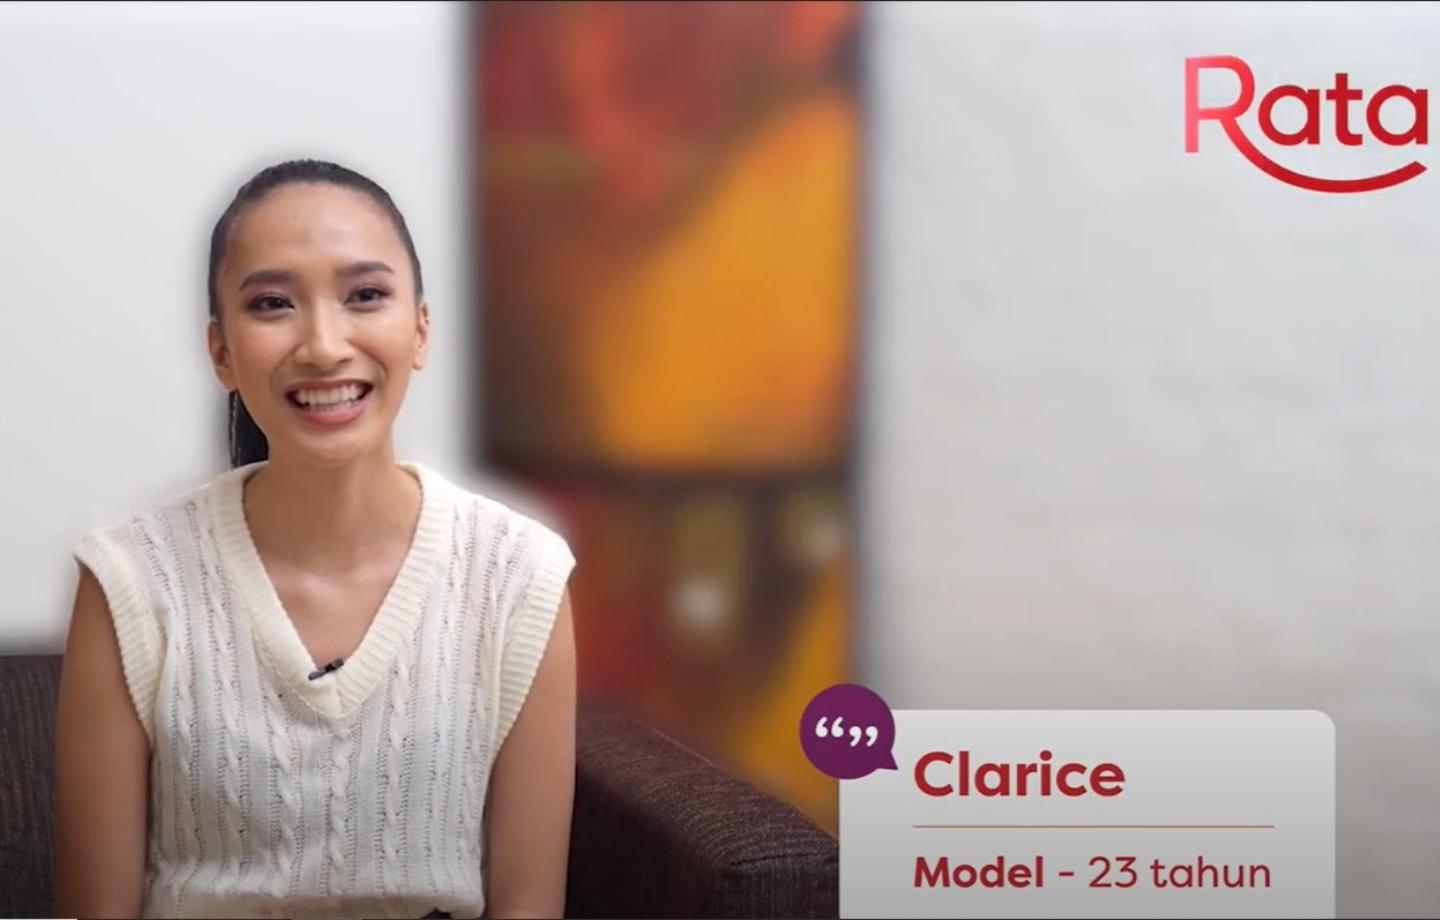 Clarice Review Aligner Rata.id: Ratain Gigi, Modeling Tetap Lancar